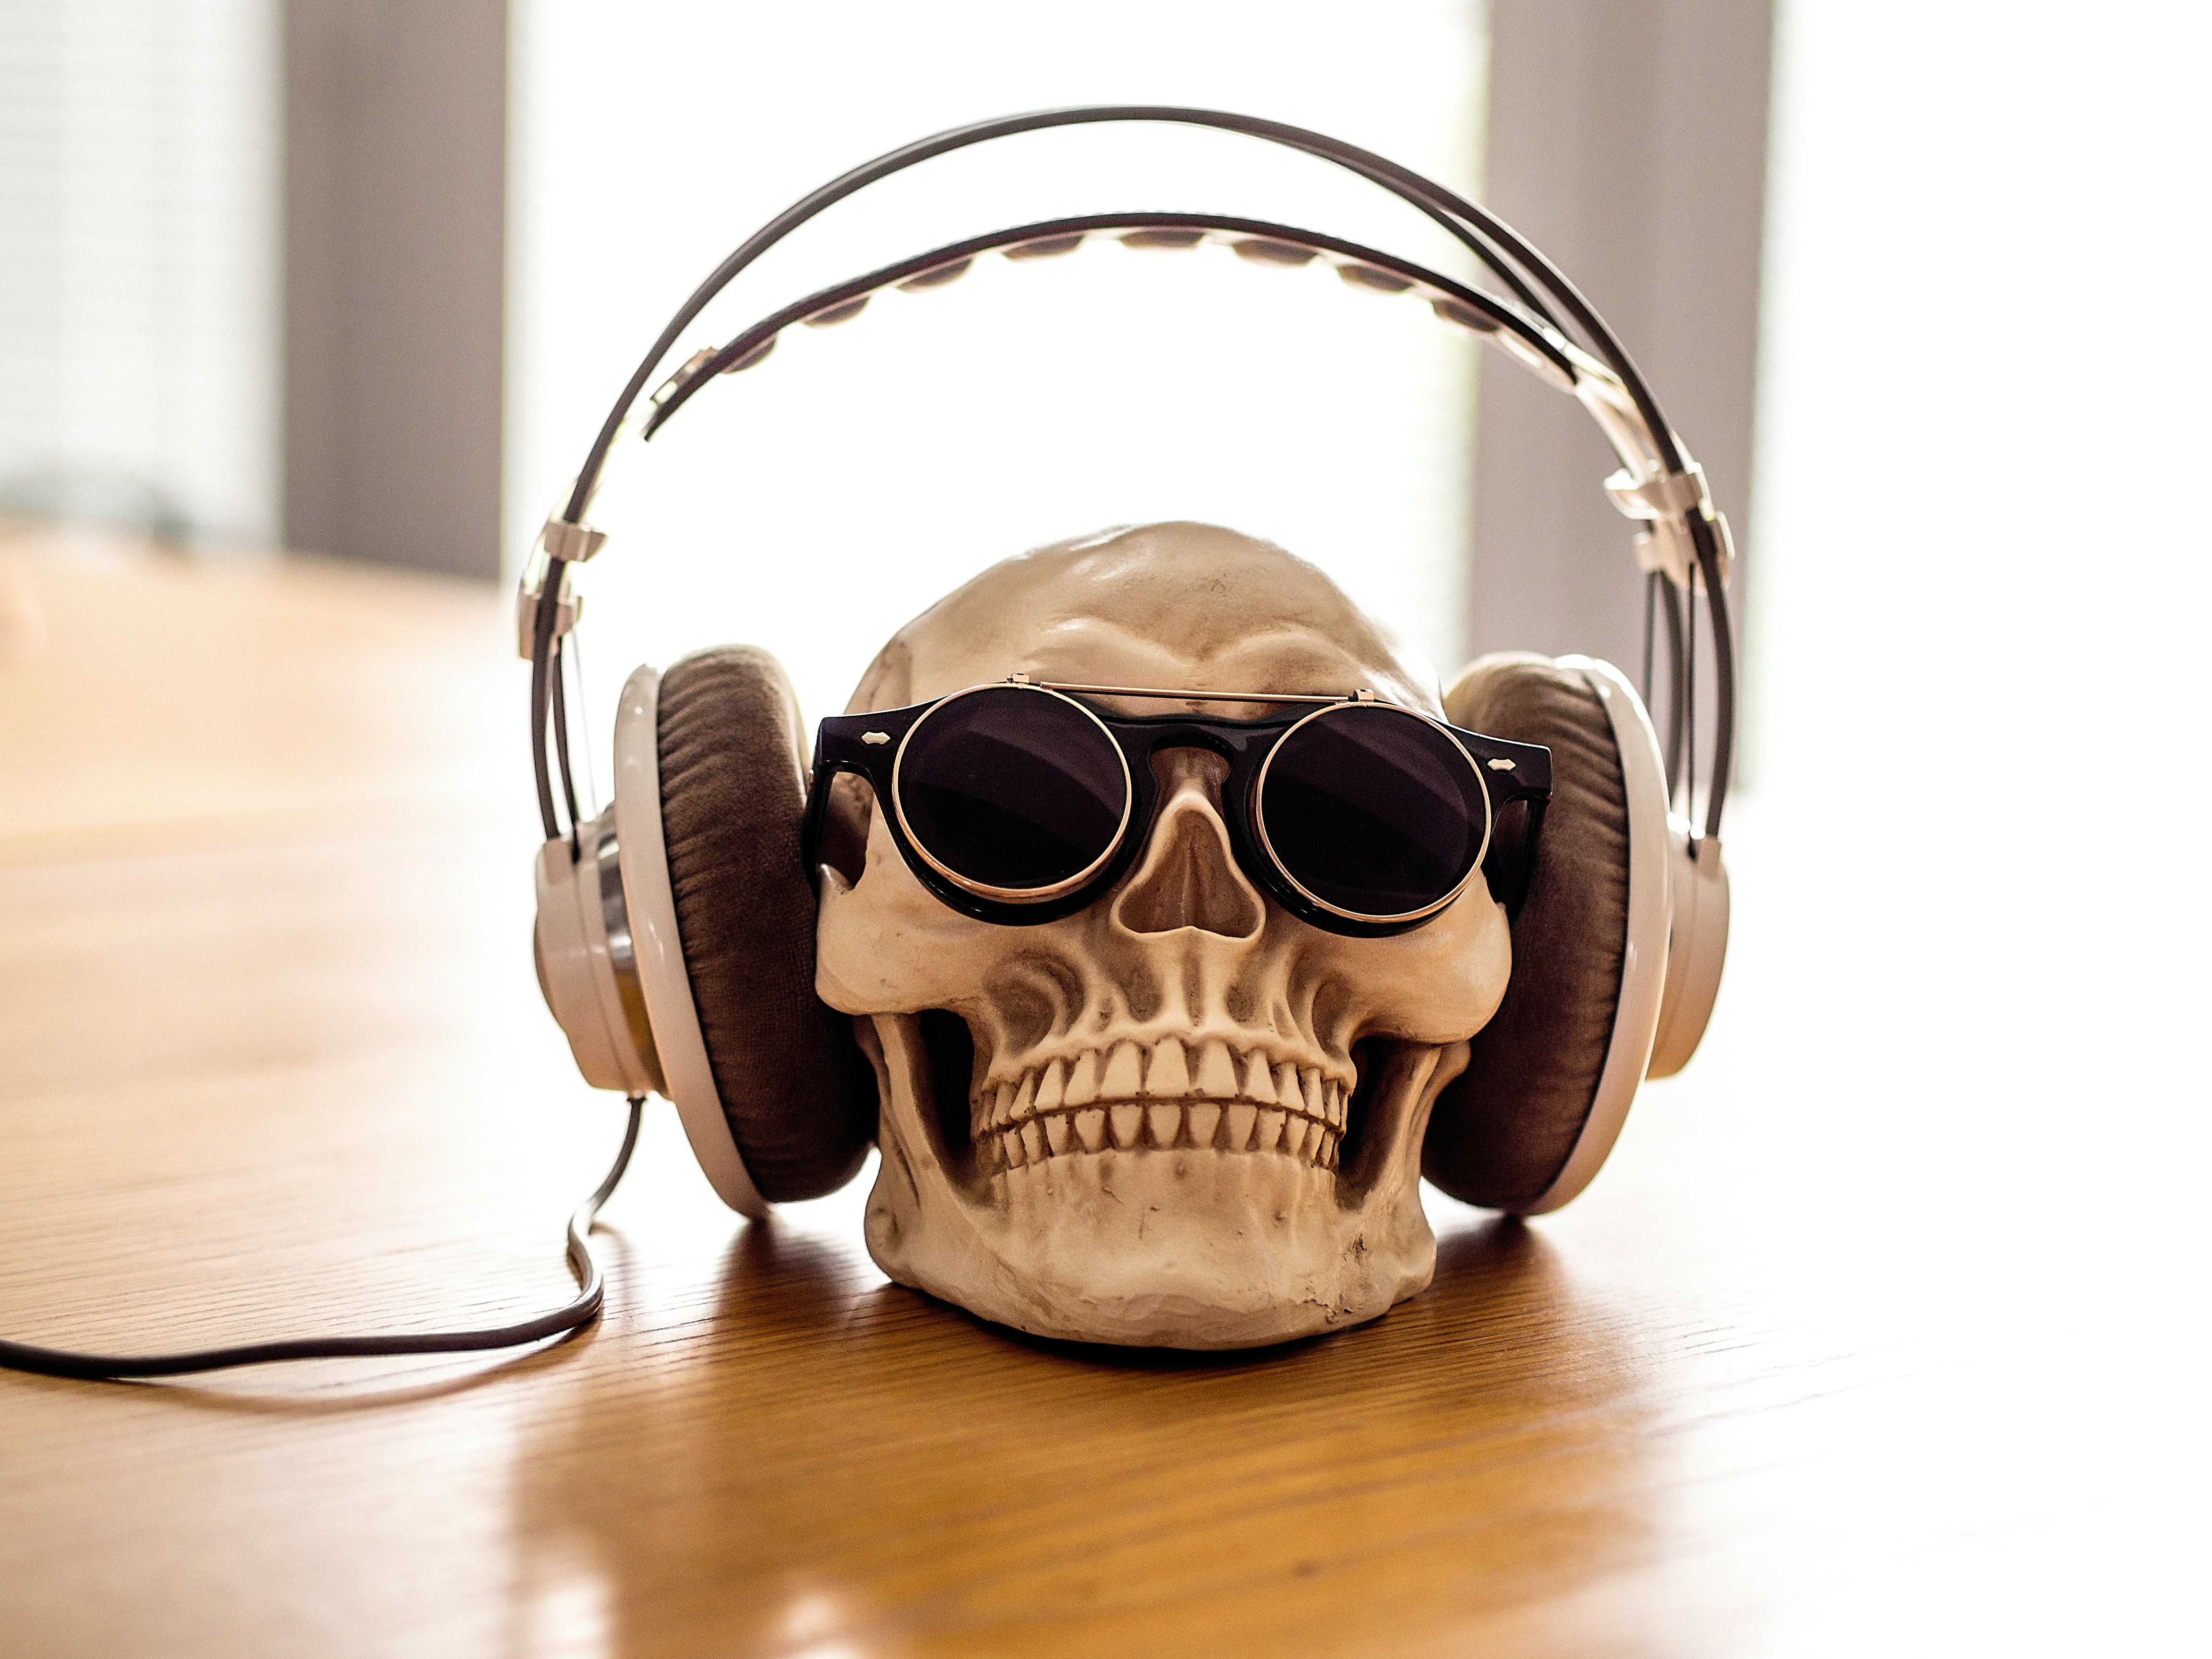 A skull wearing white headphones